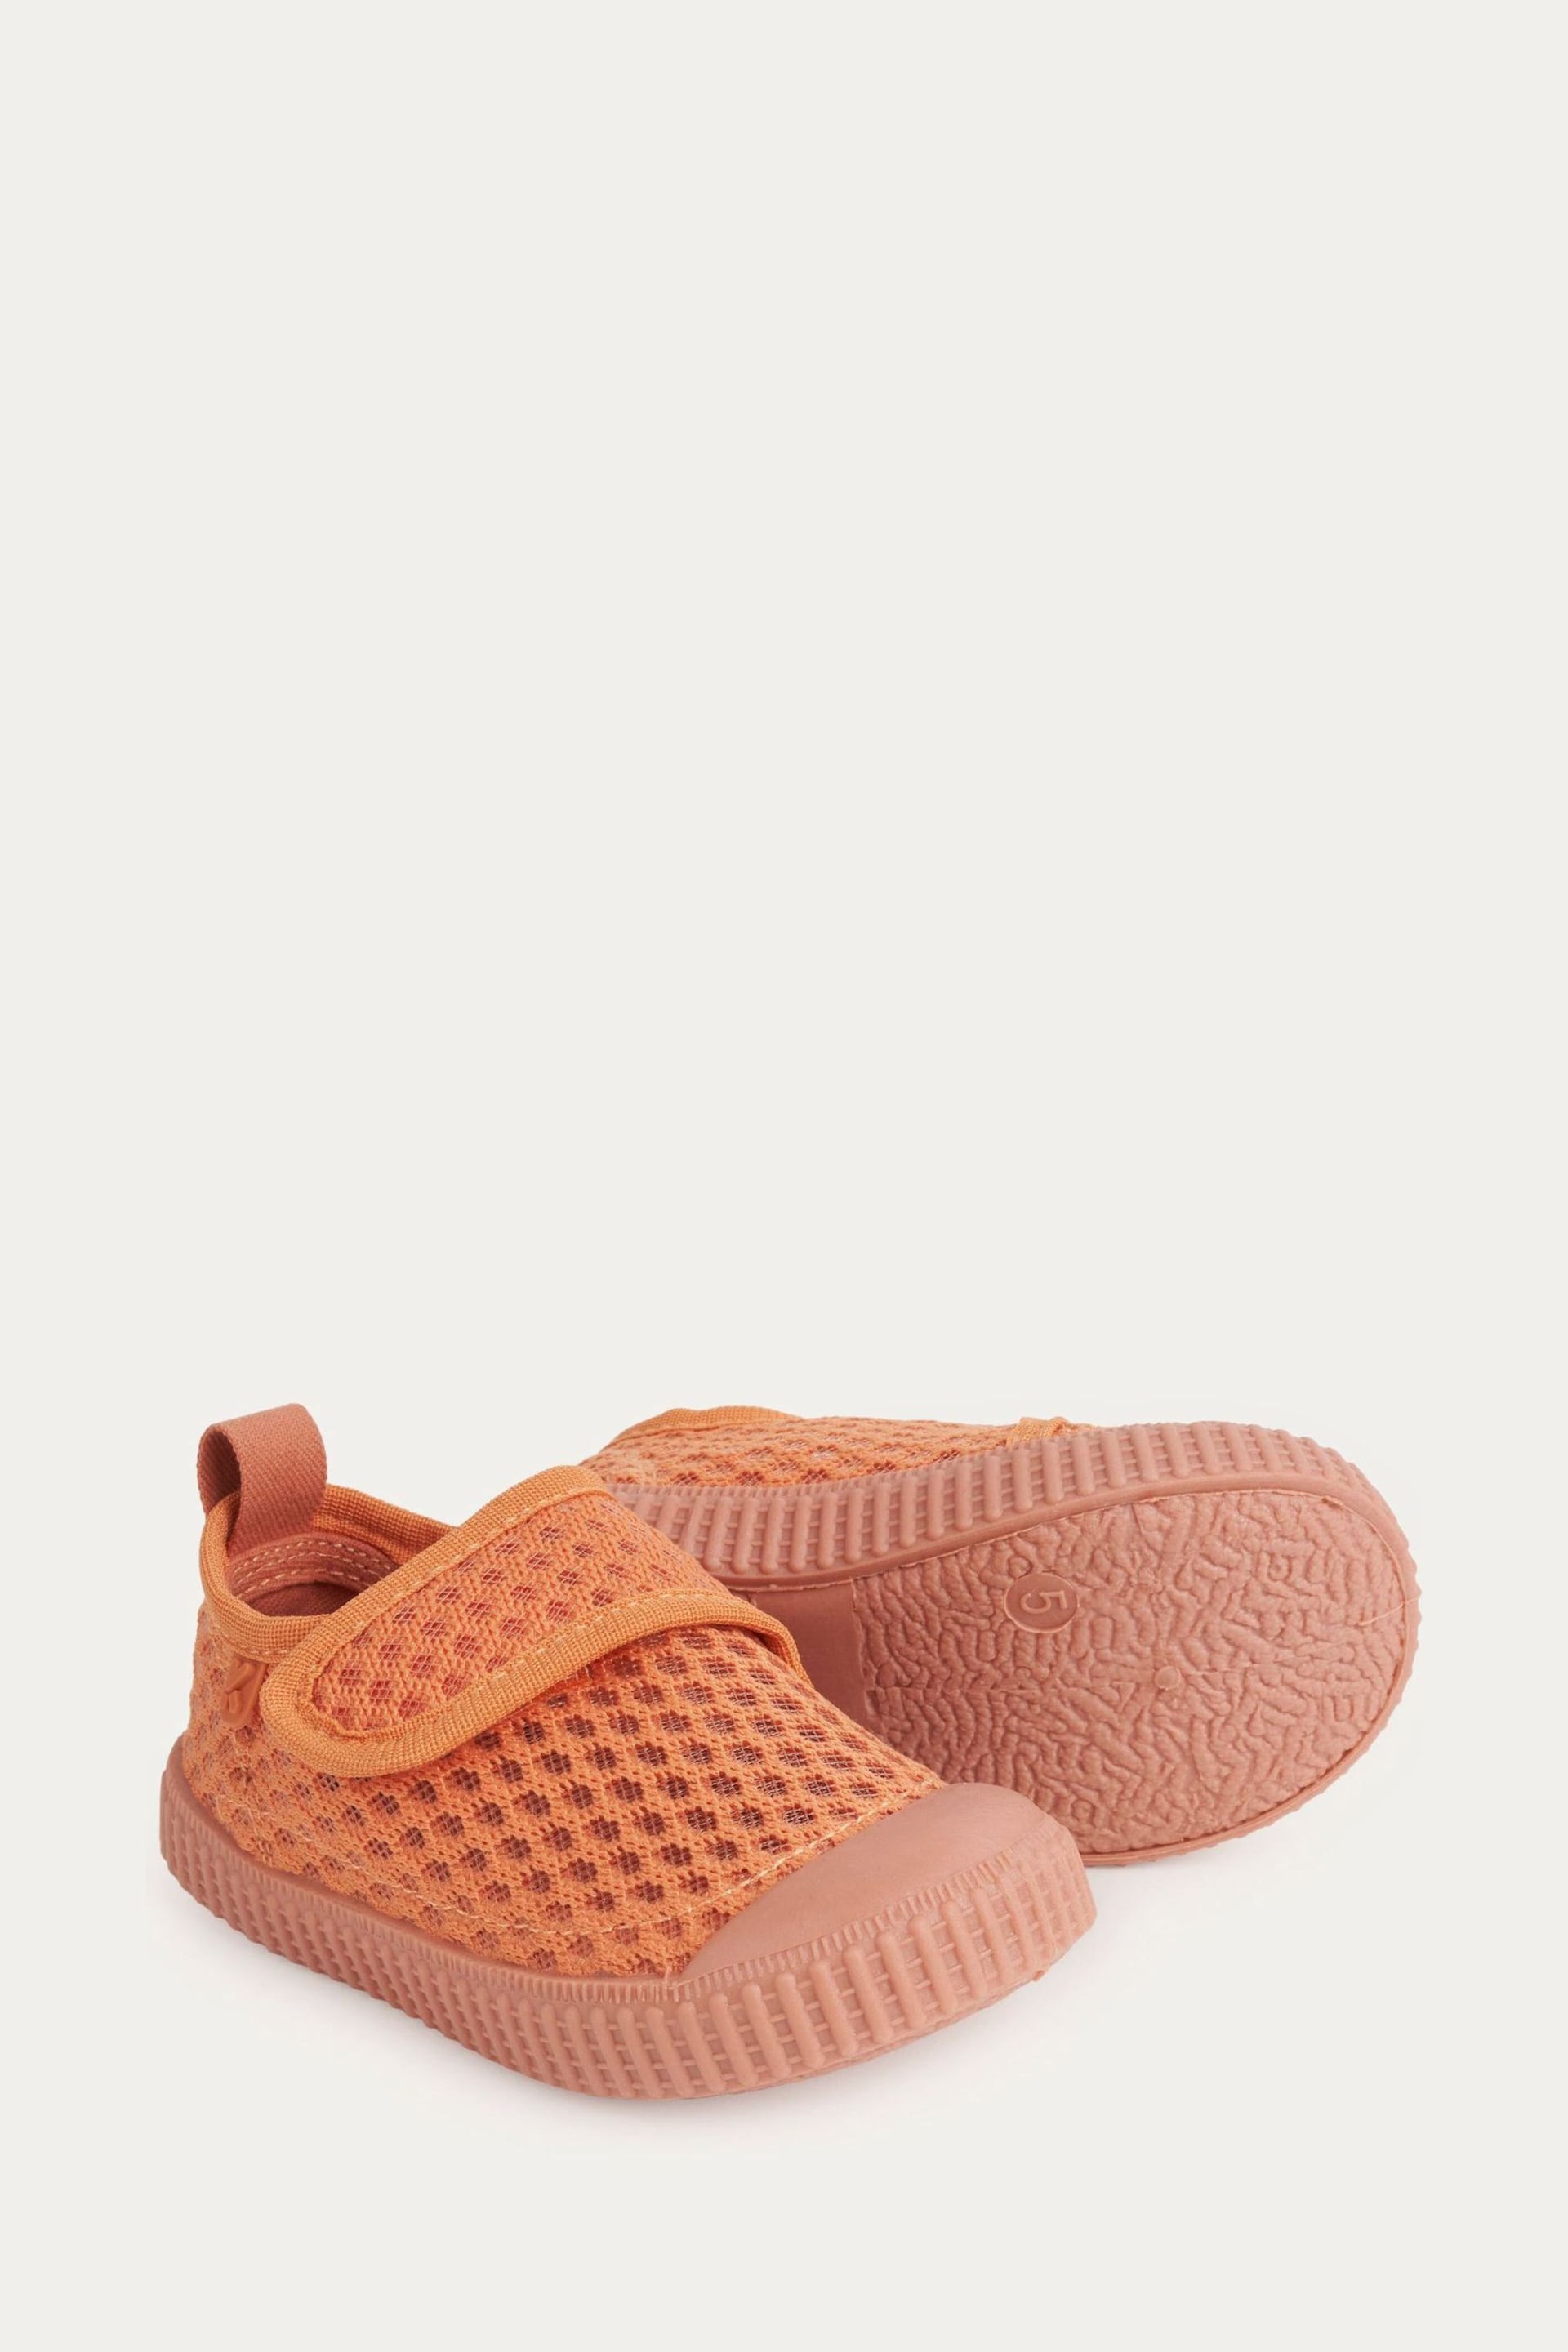 KIDLY Orange Mesh Swim Shoes - Image 3 of 4